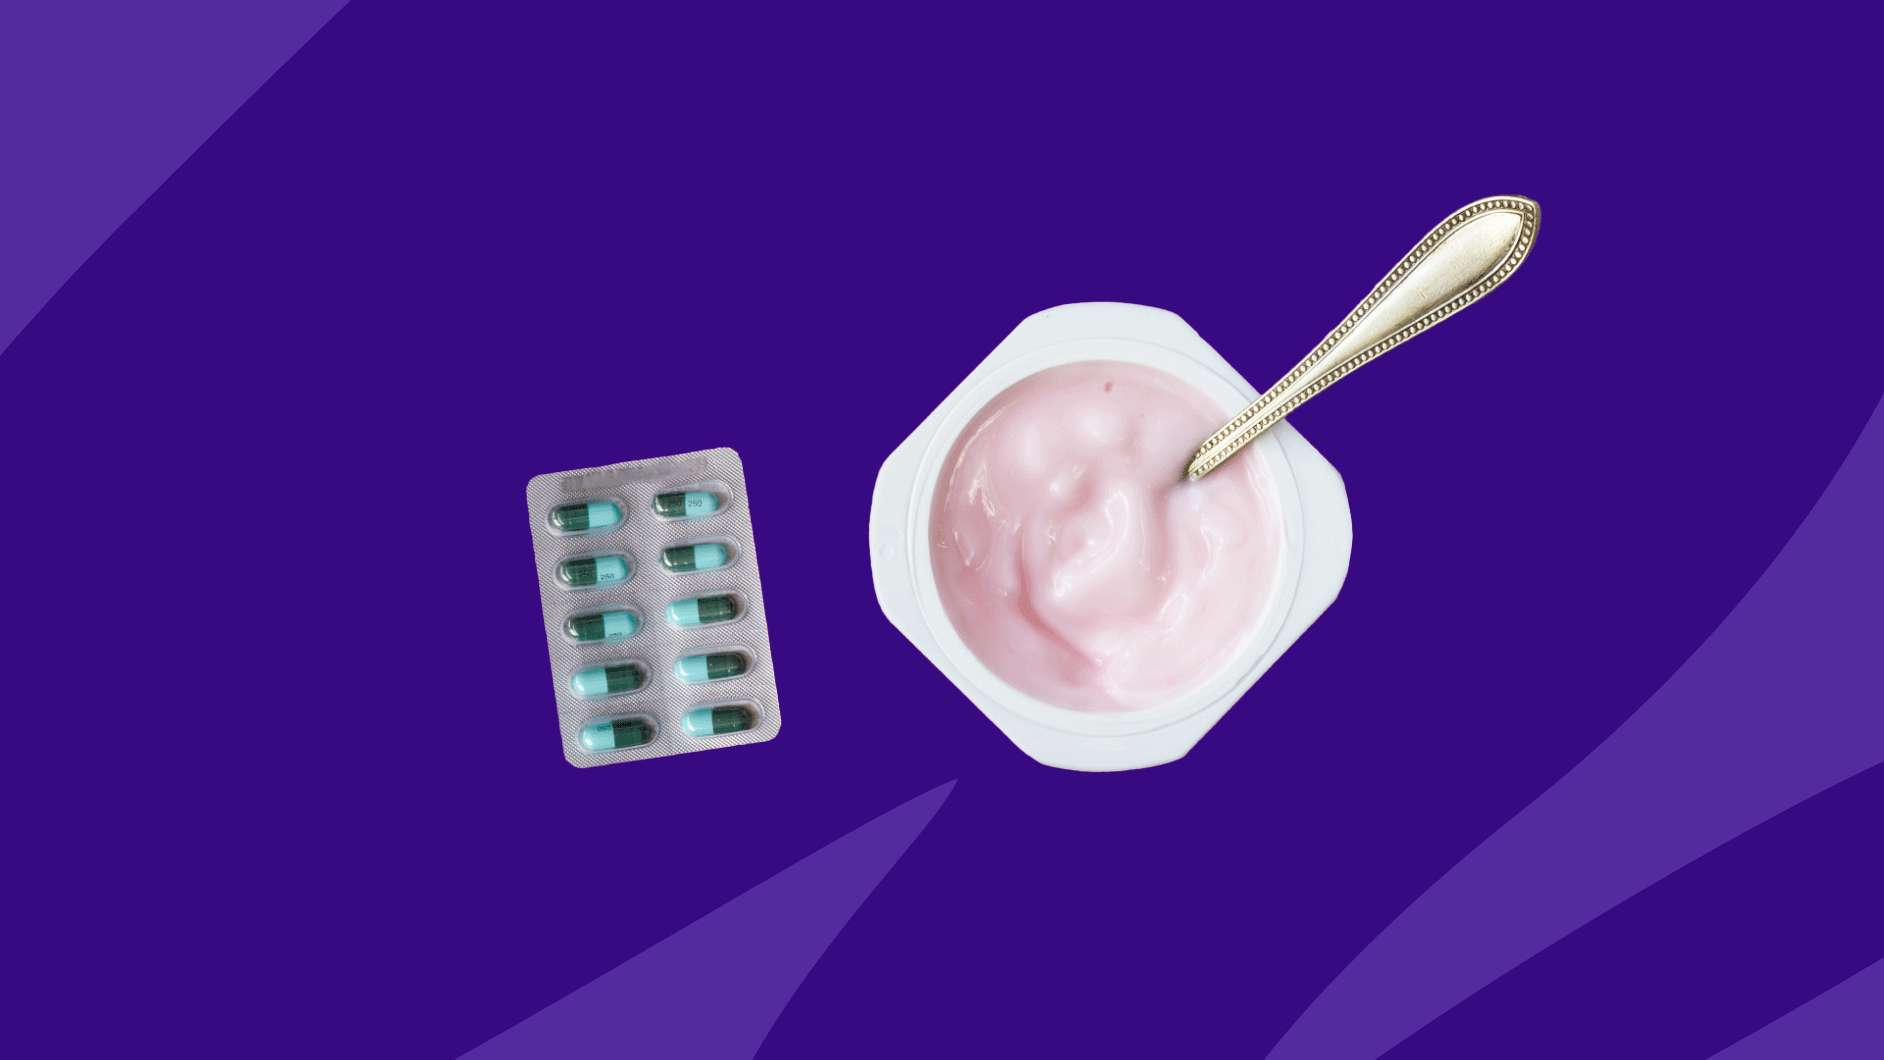 Yogurt and pills symbolize yeast infection from antibiotics